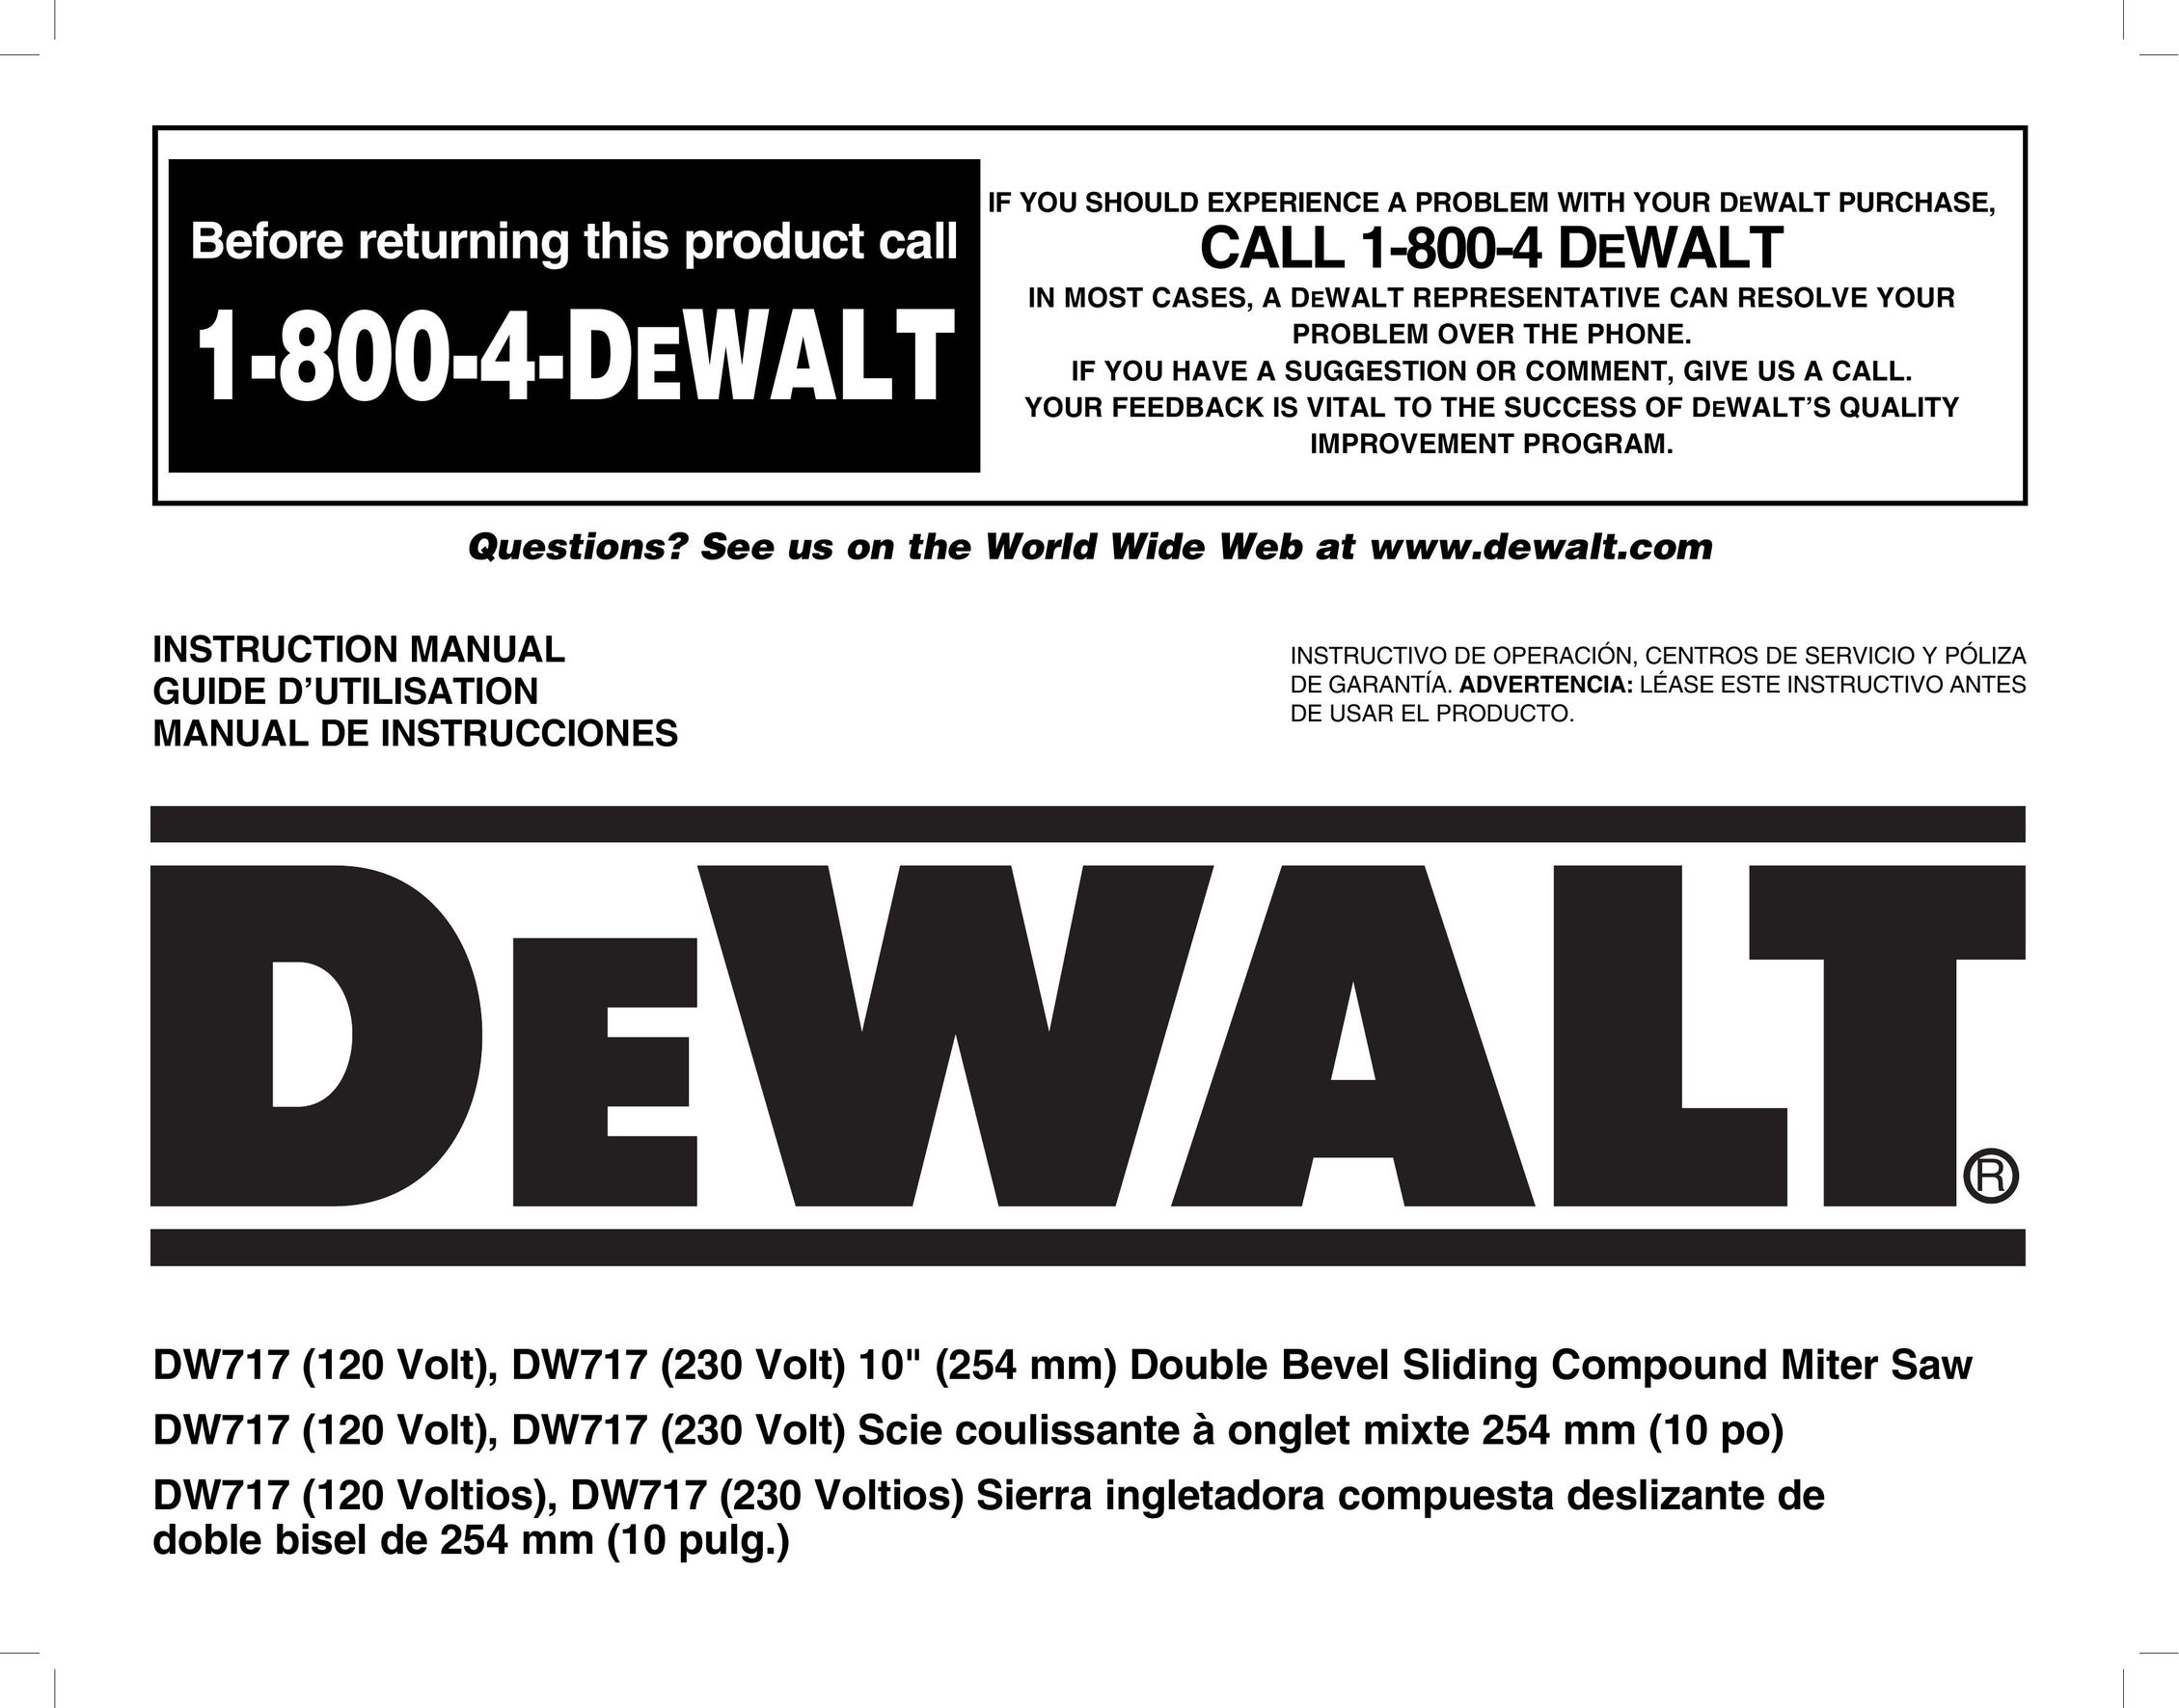 DeWalt DW717 Cordless Saw User Manual